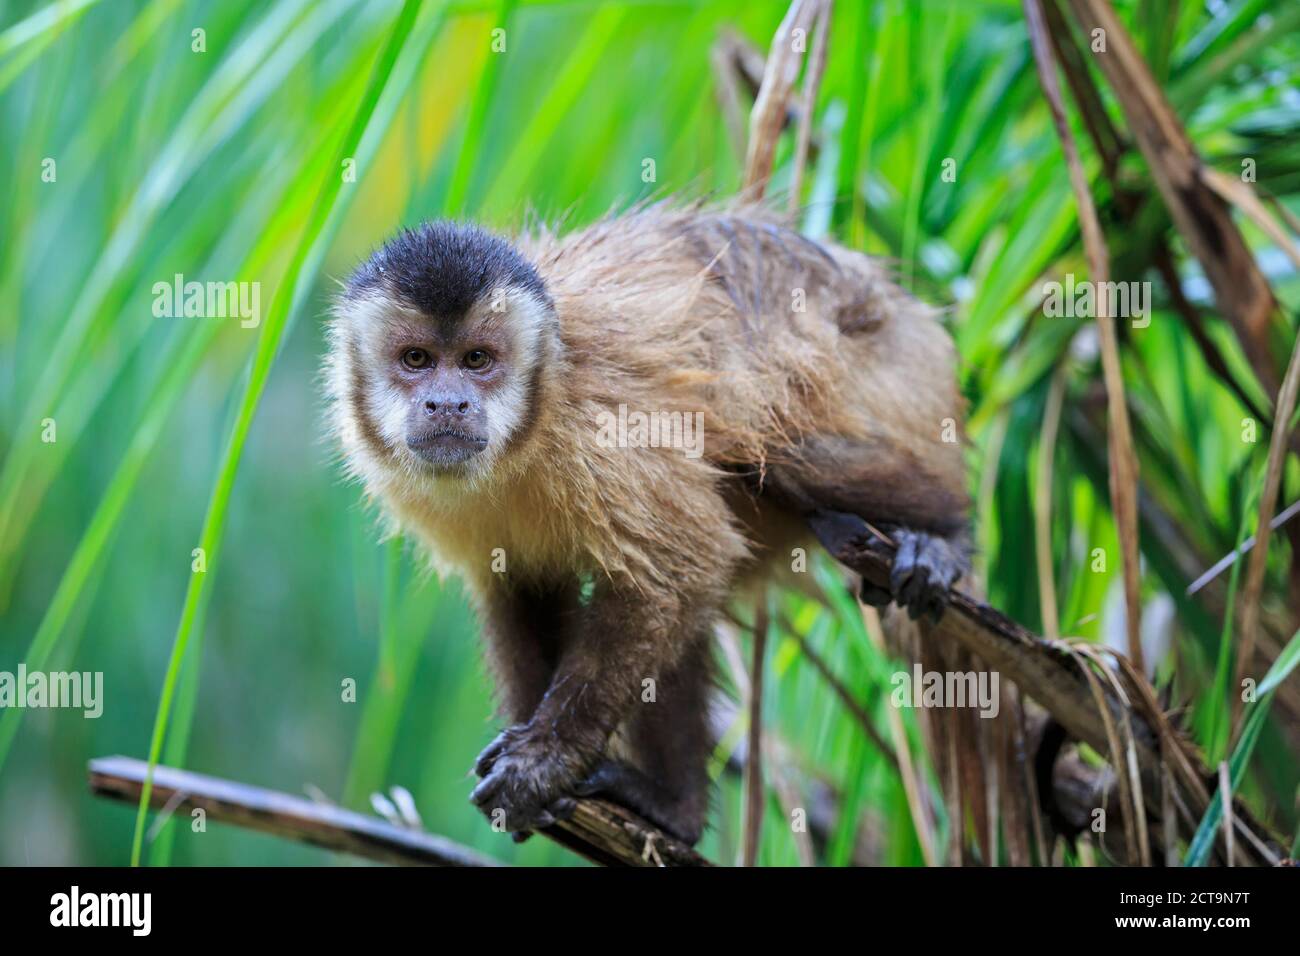 Brazil, Mato Grosso, Mato Grosso do Sul, capuchin monkey  sitting on branch Stock Photo